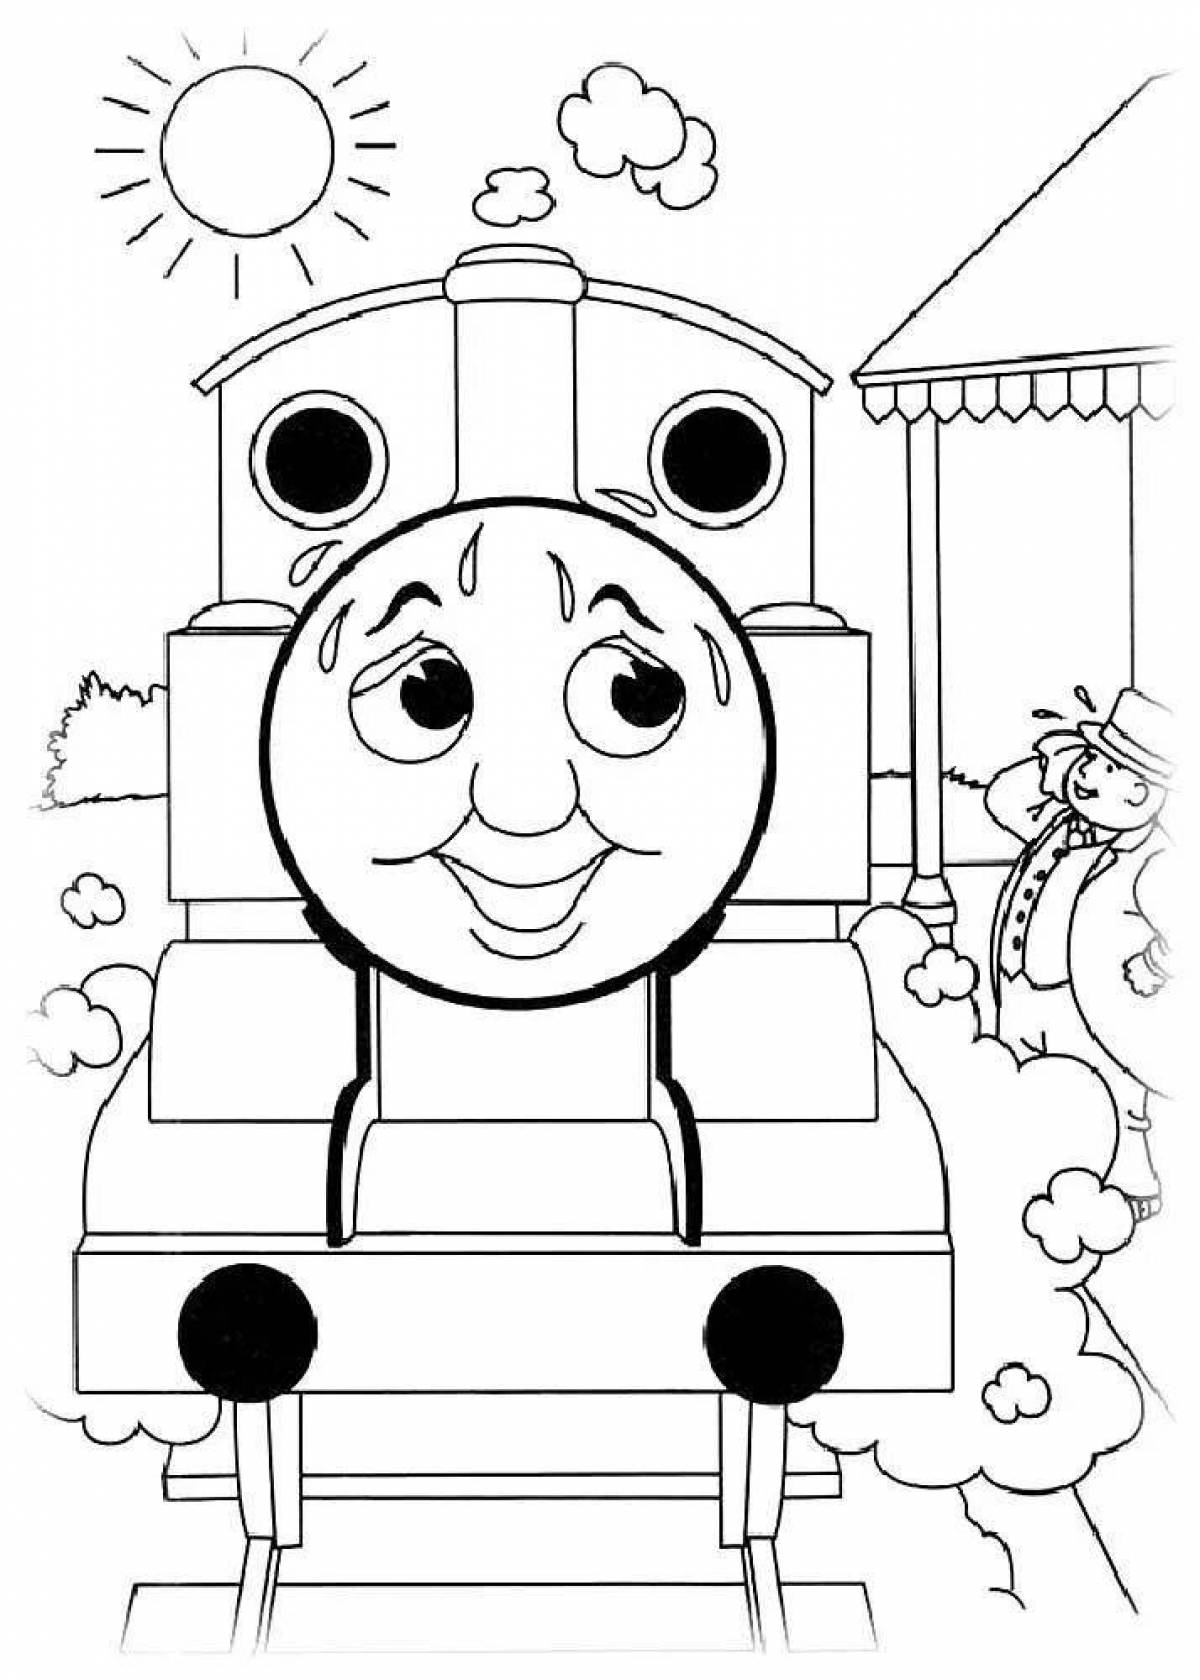 Потрясающая страница раскраски локомотива томаса